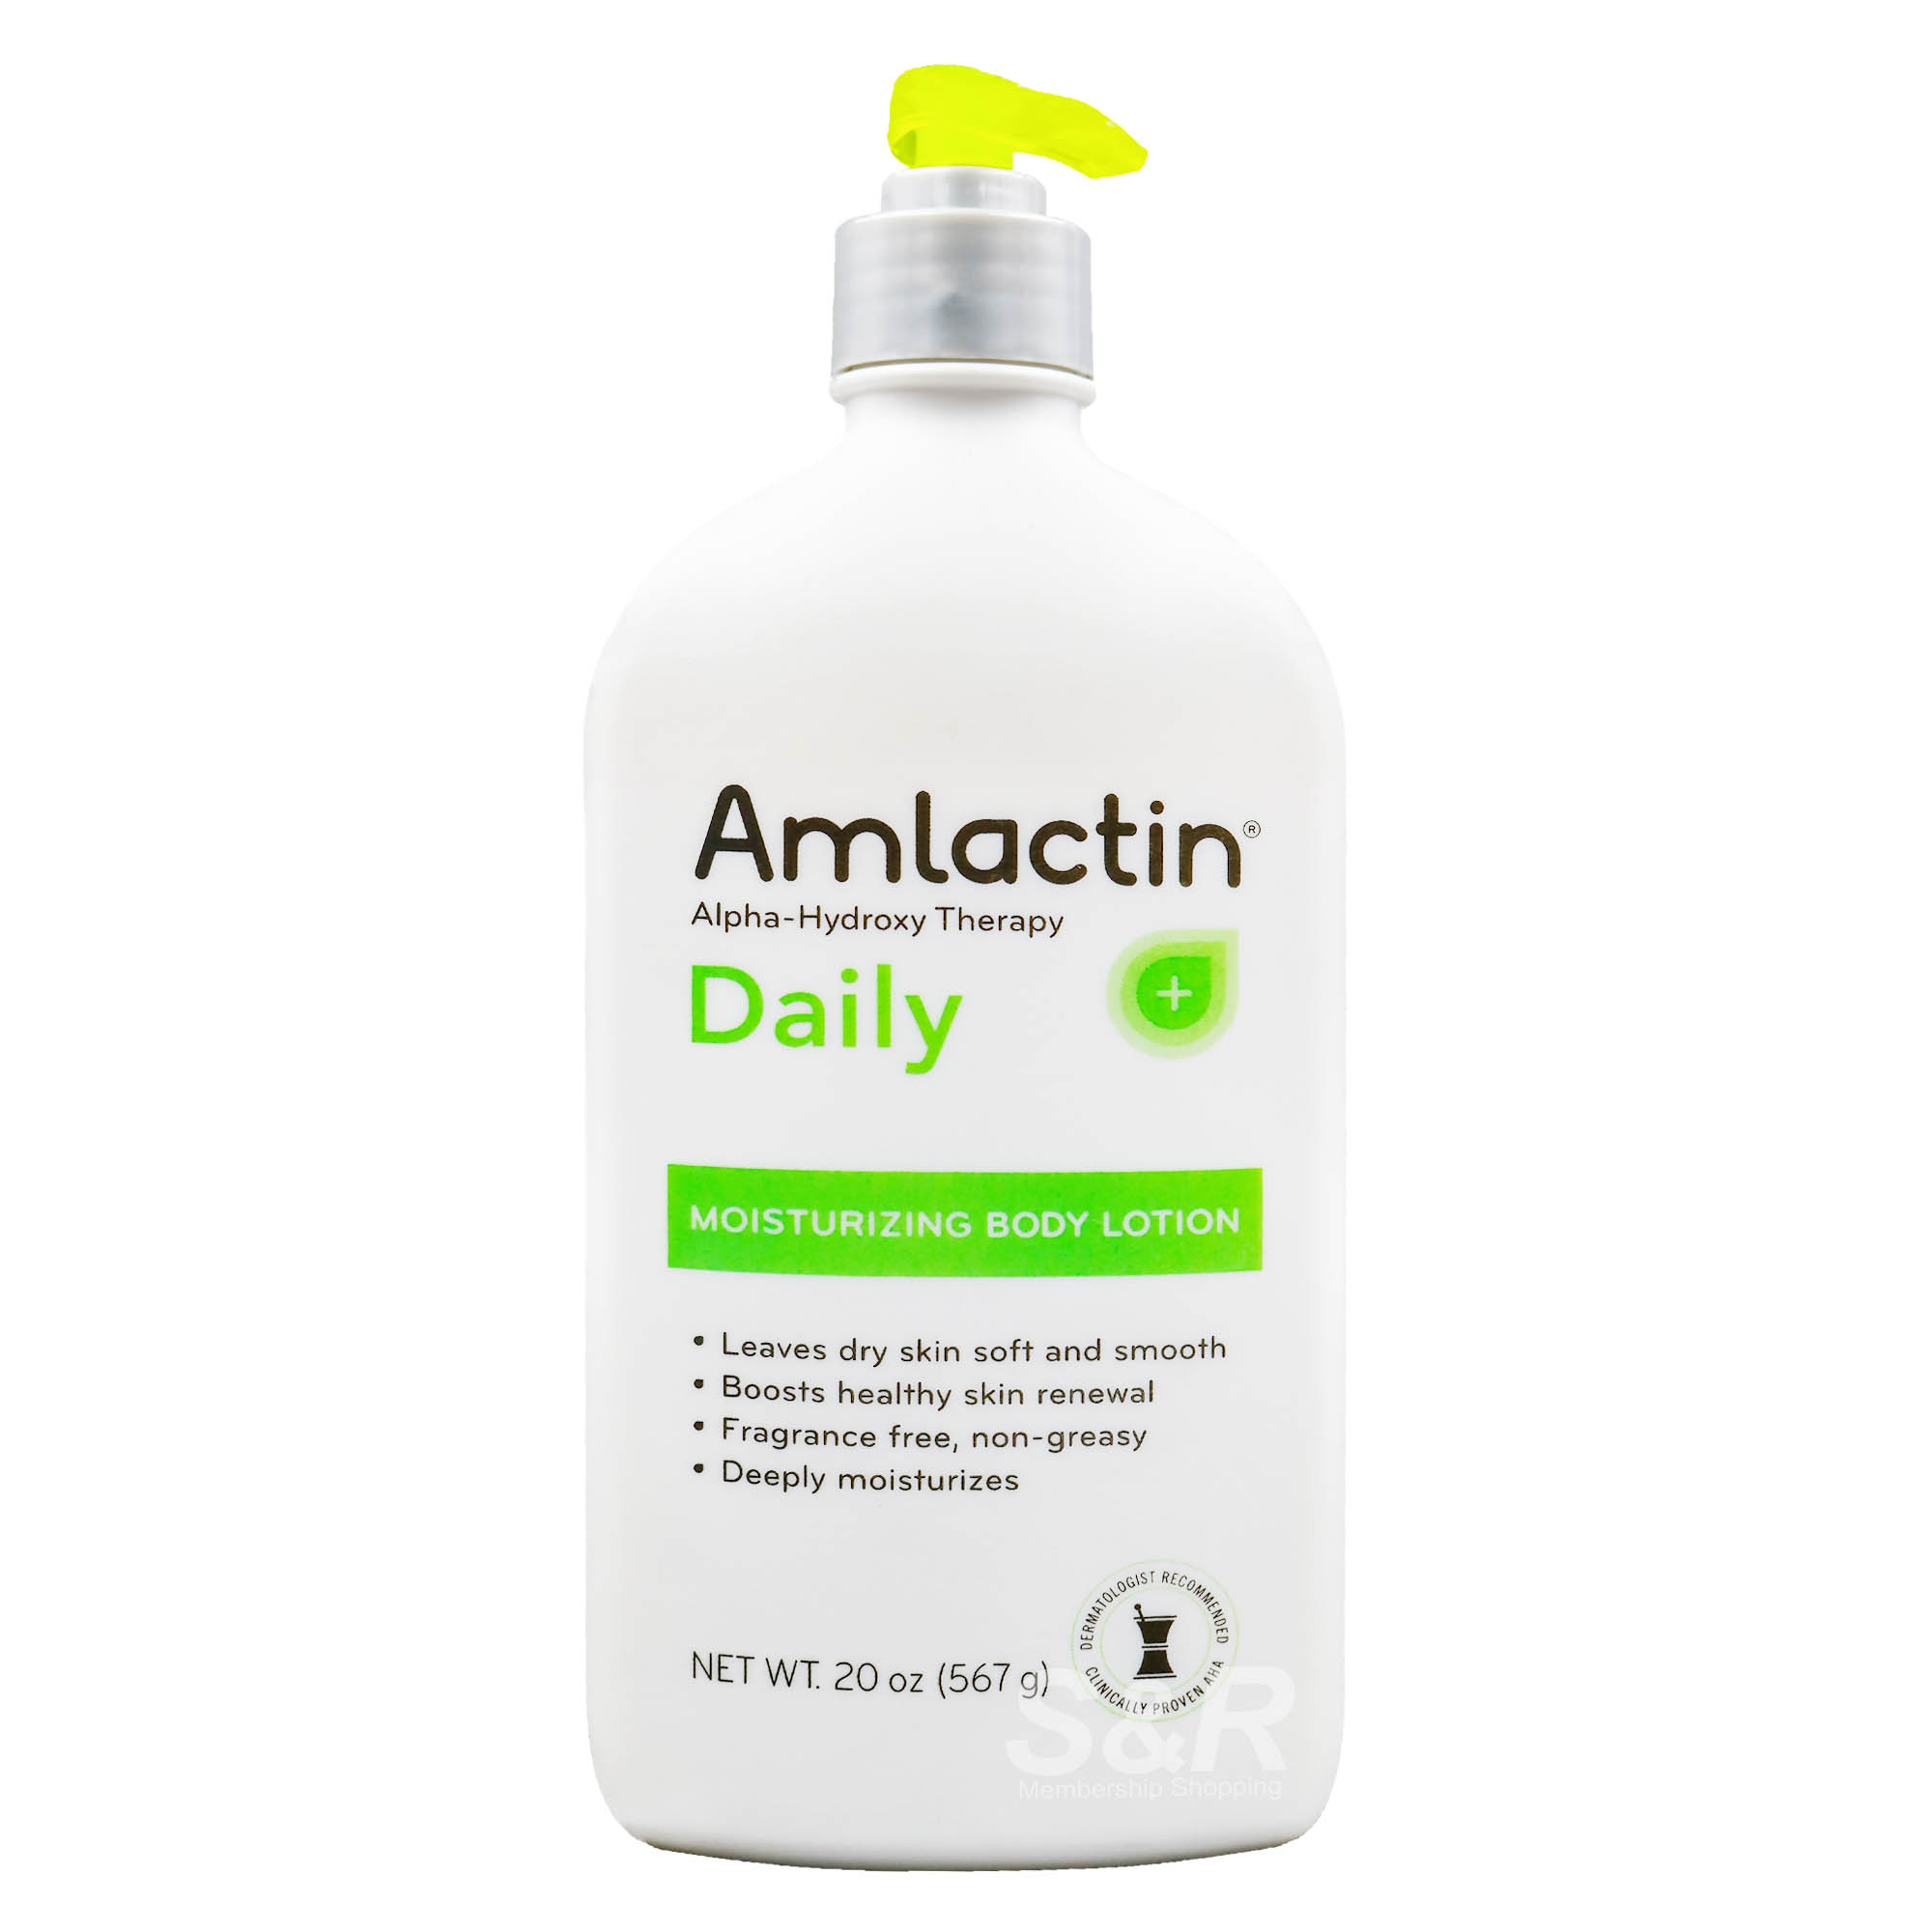 Amlactin Alpha Hydroxy Therapy Daily Moisturizing Body Lotion 567 g